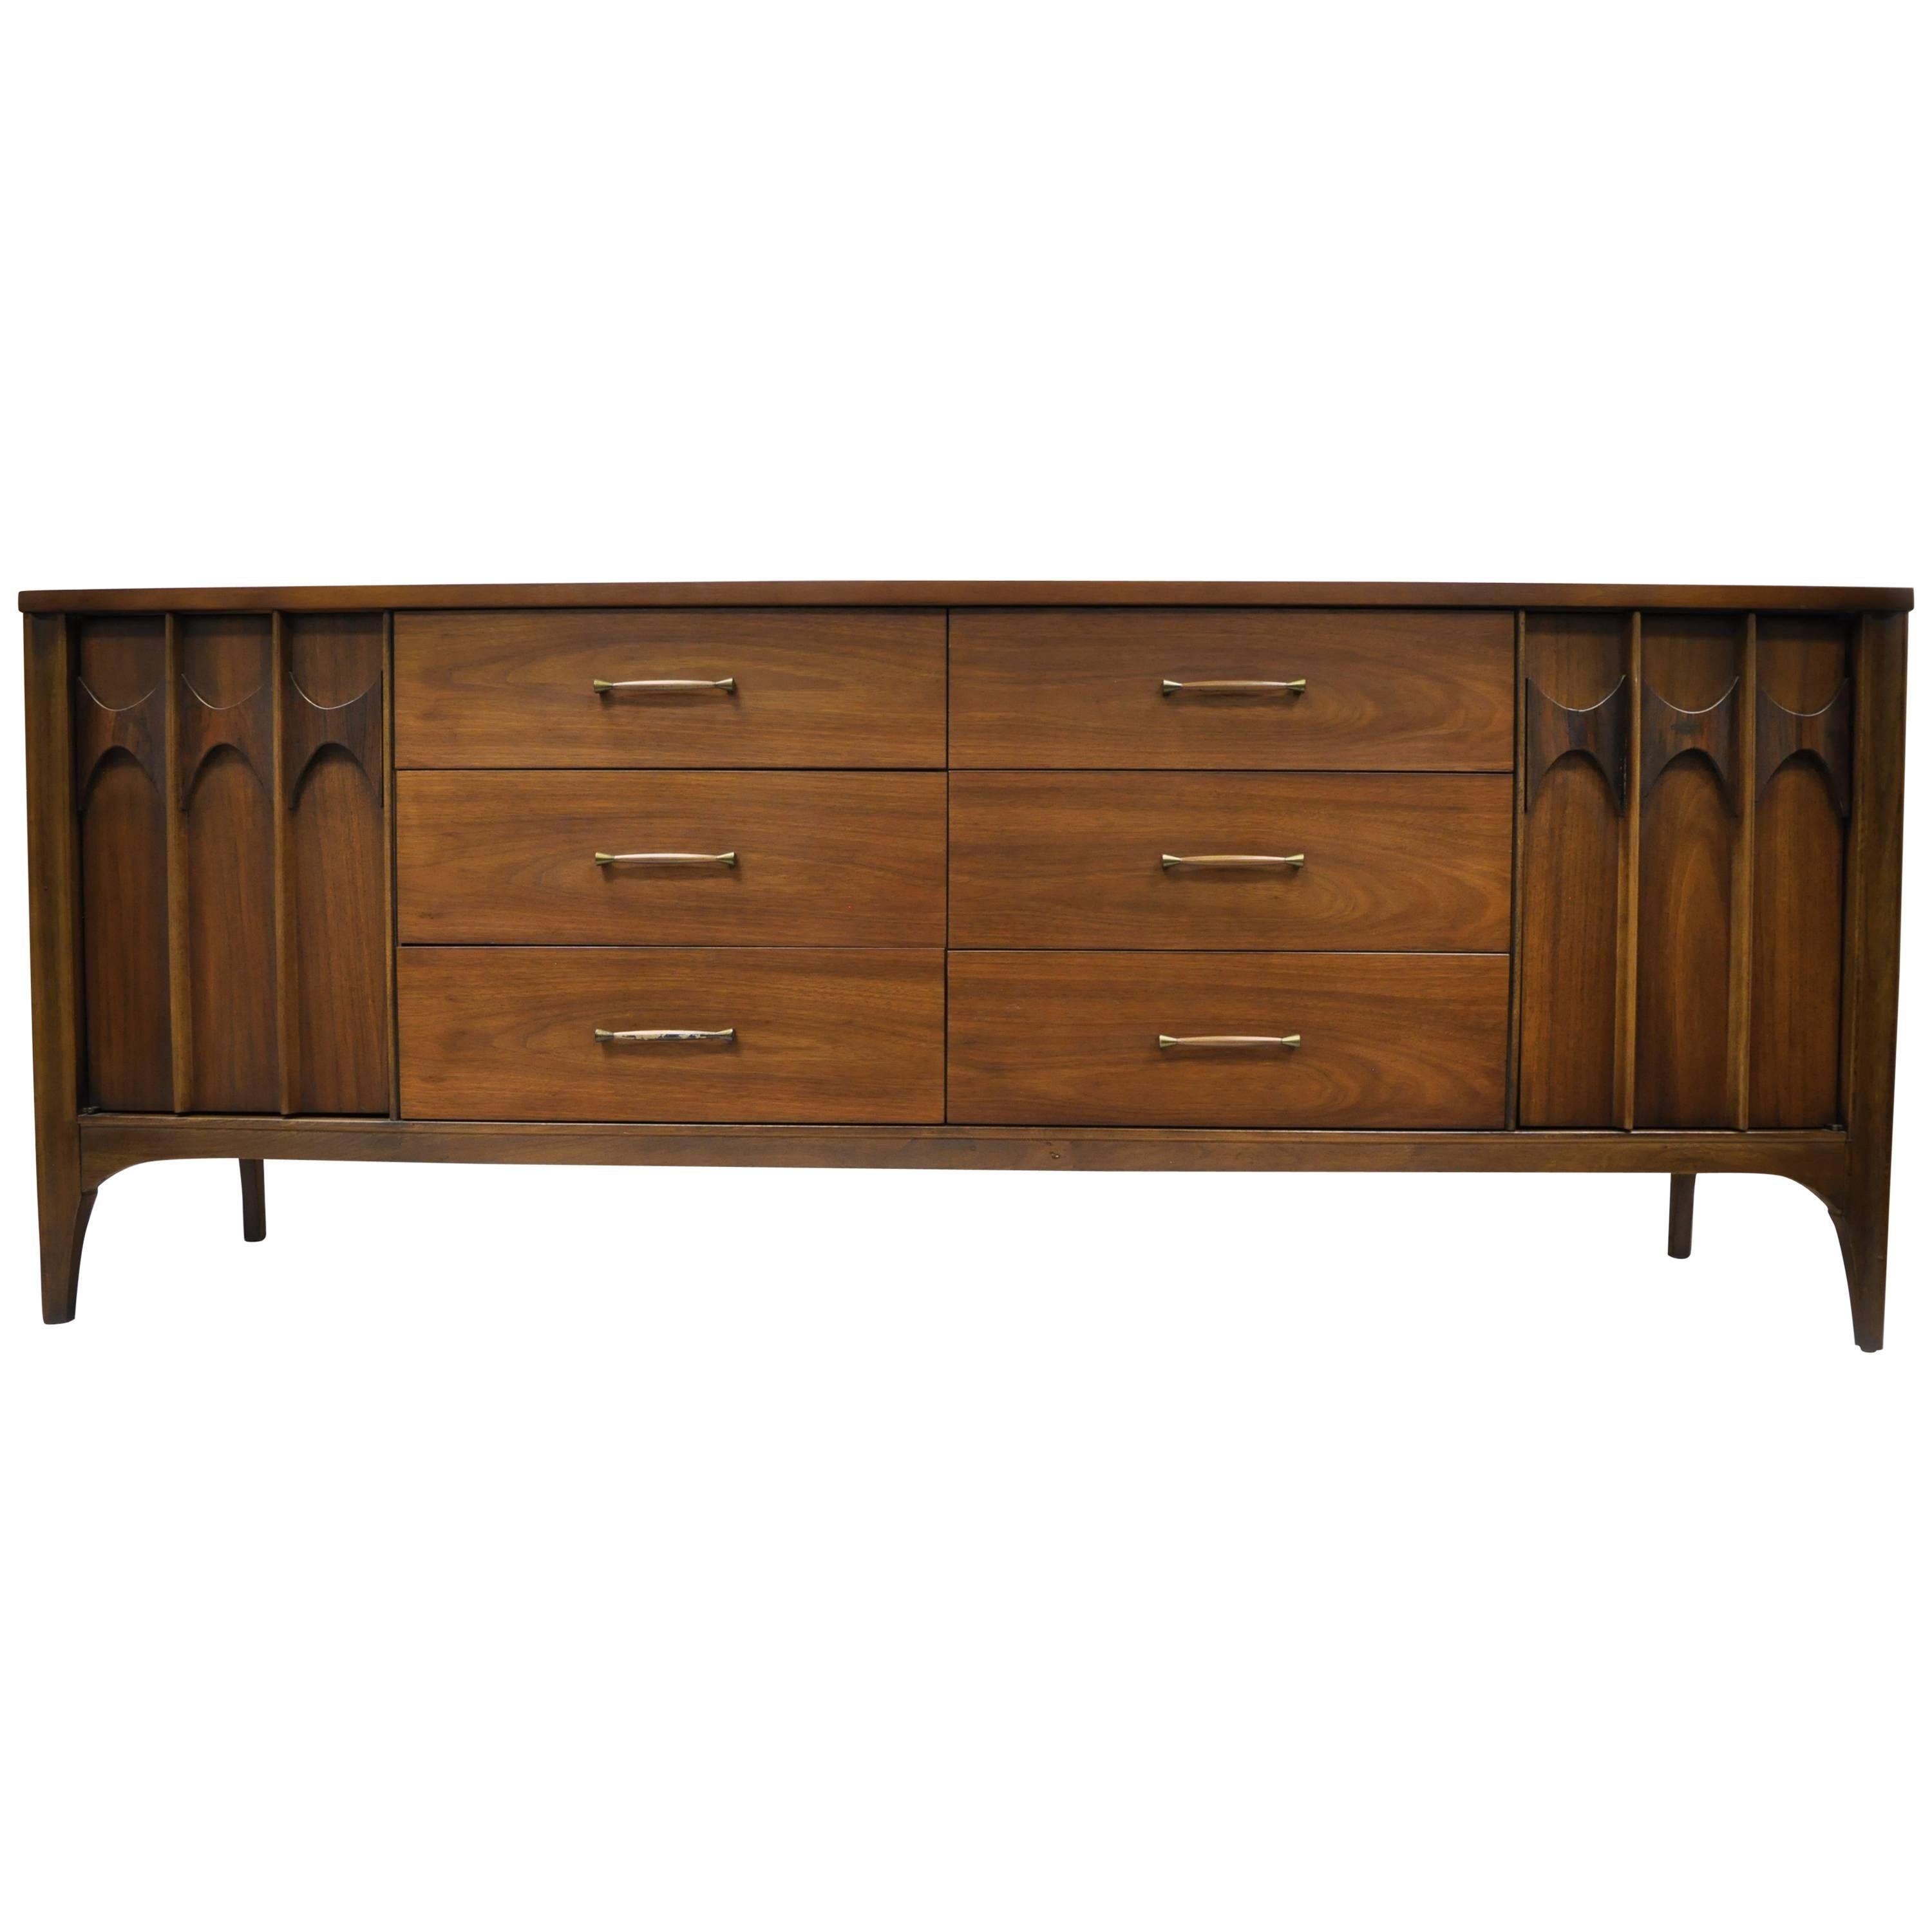 Kent Coffey Perspecta Walnut Rosewood Credenza Long Dresser Mid-Century Modern